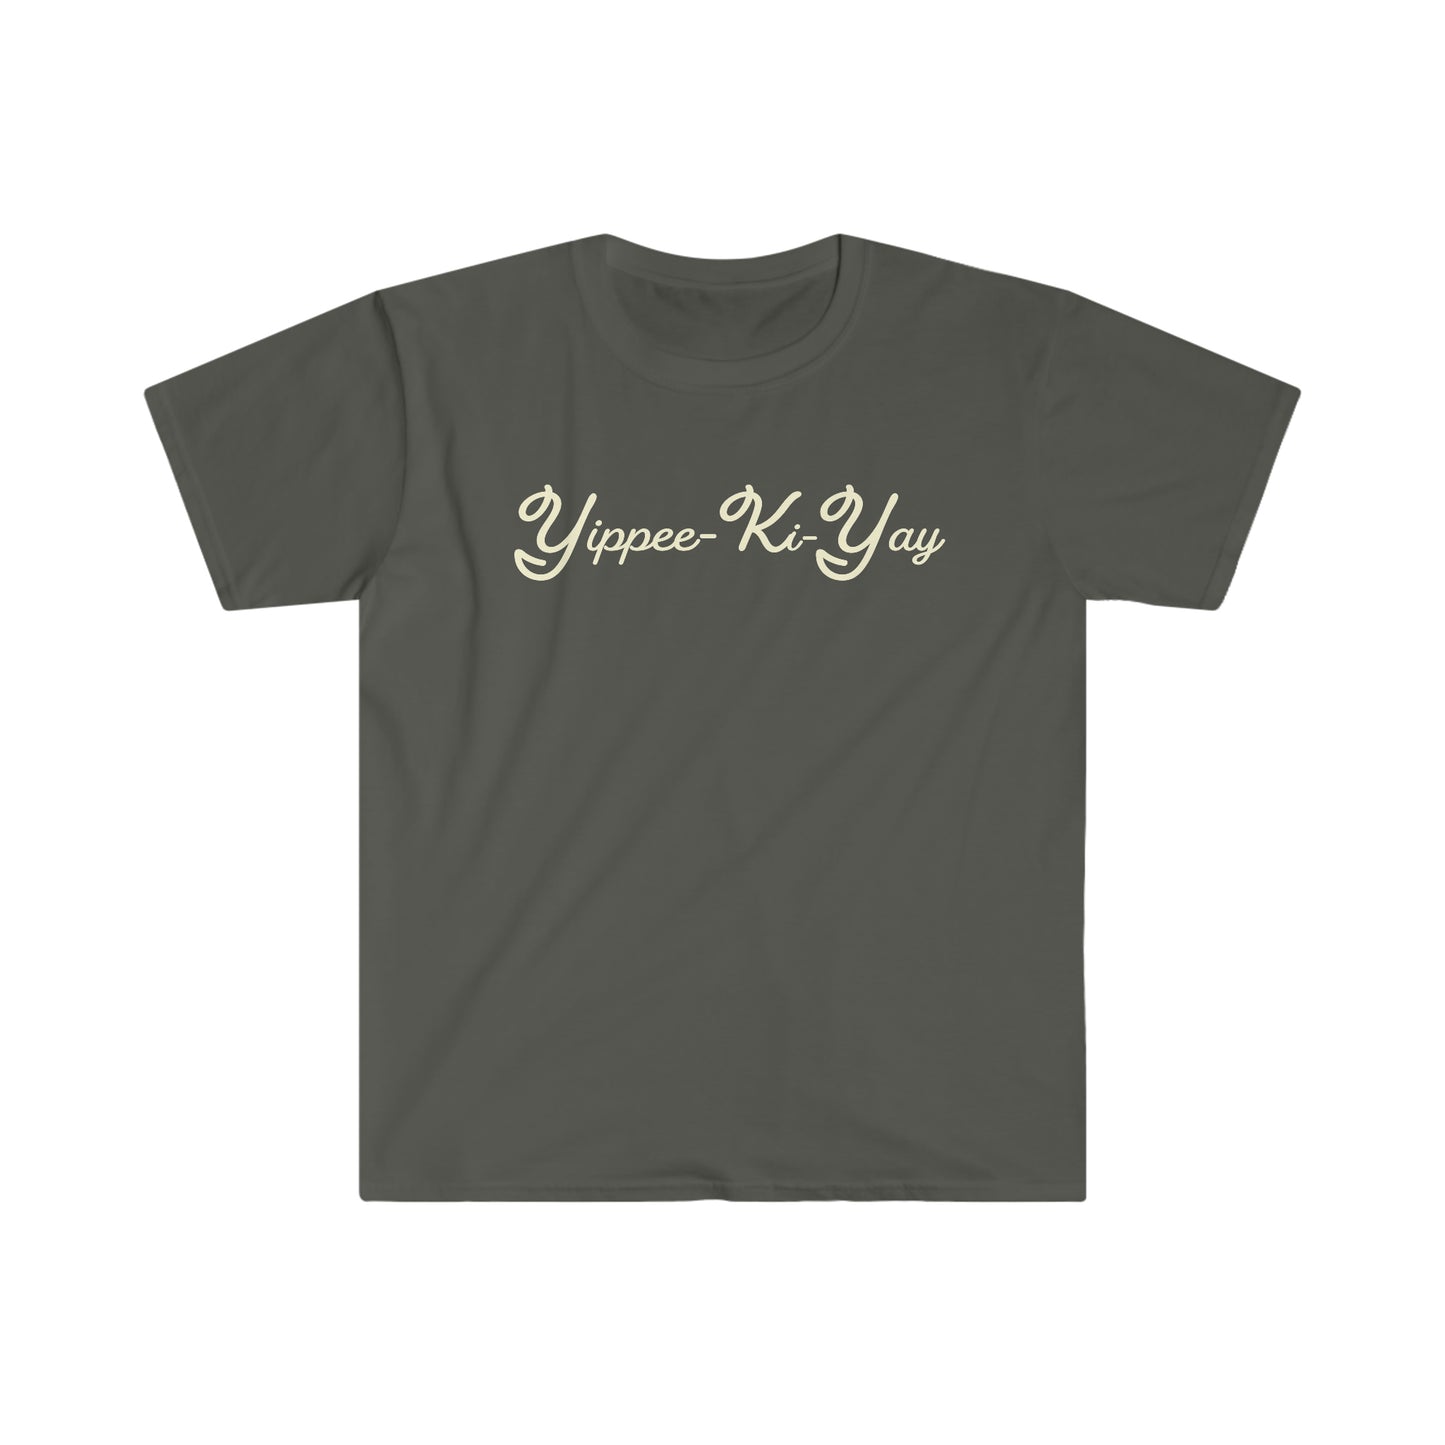 Yippee Ki Yay T-Shirt